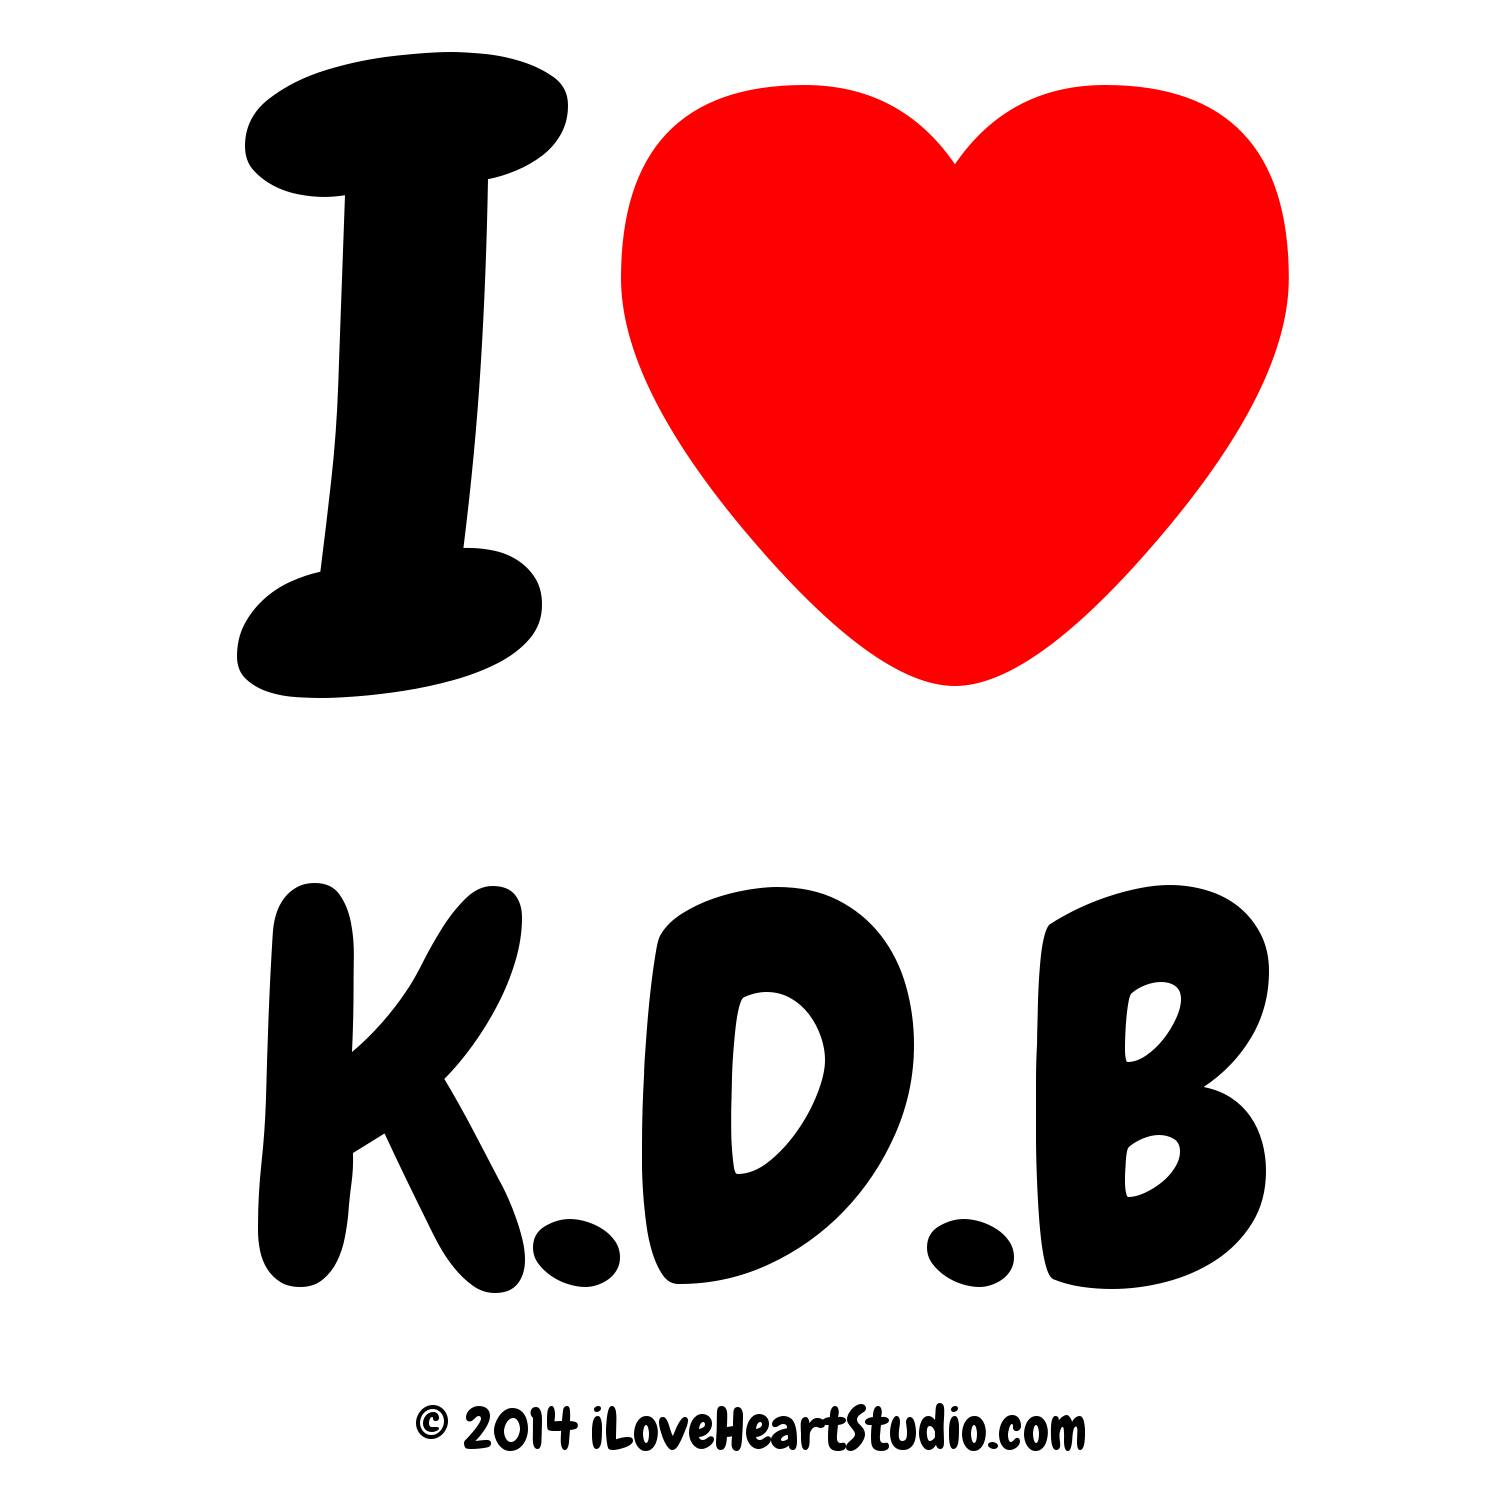 Kdb Logo - i [Love heart] k.d.b' design on t-shirt, poster, mug and many other ...